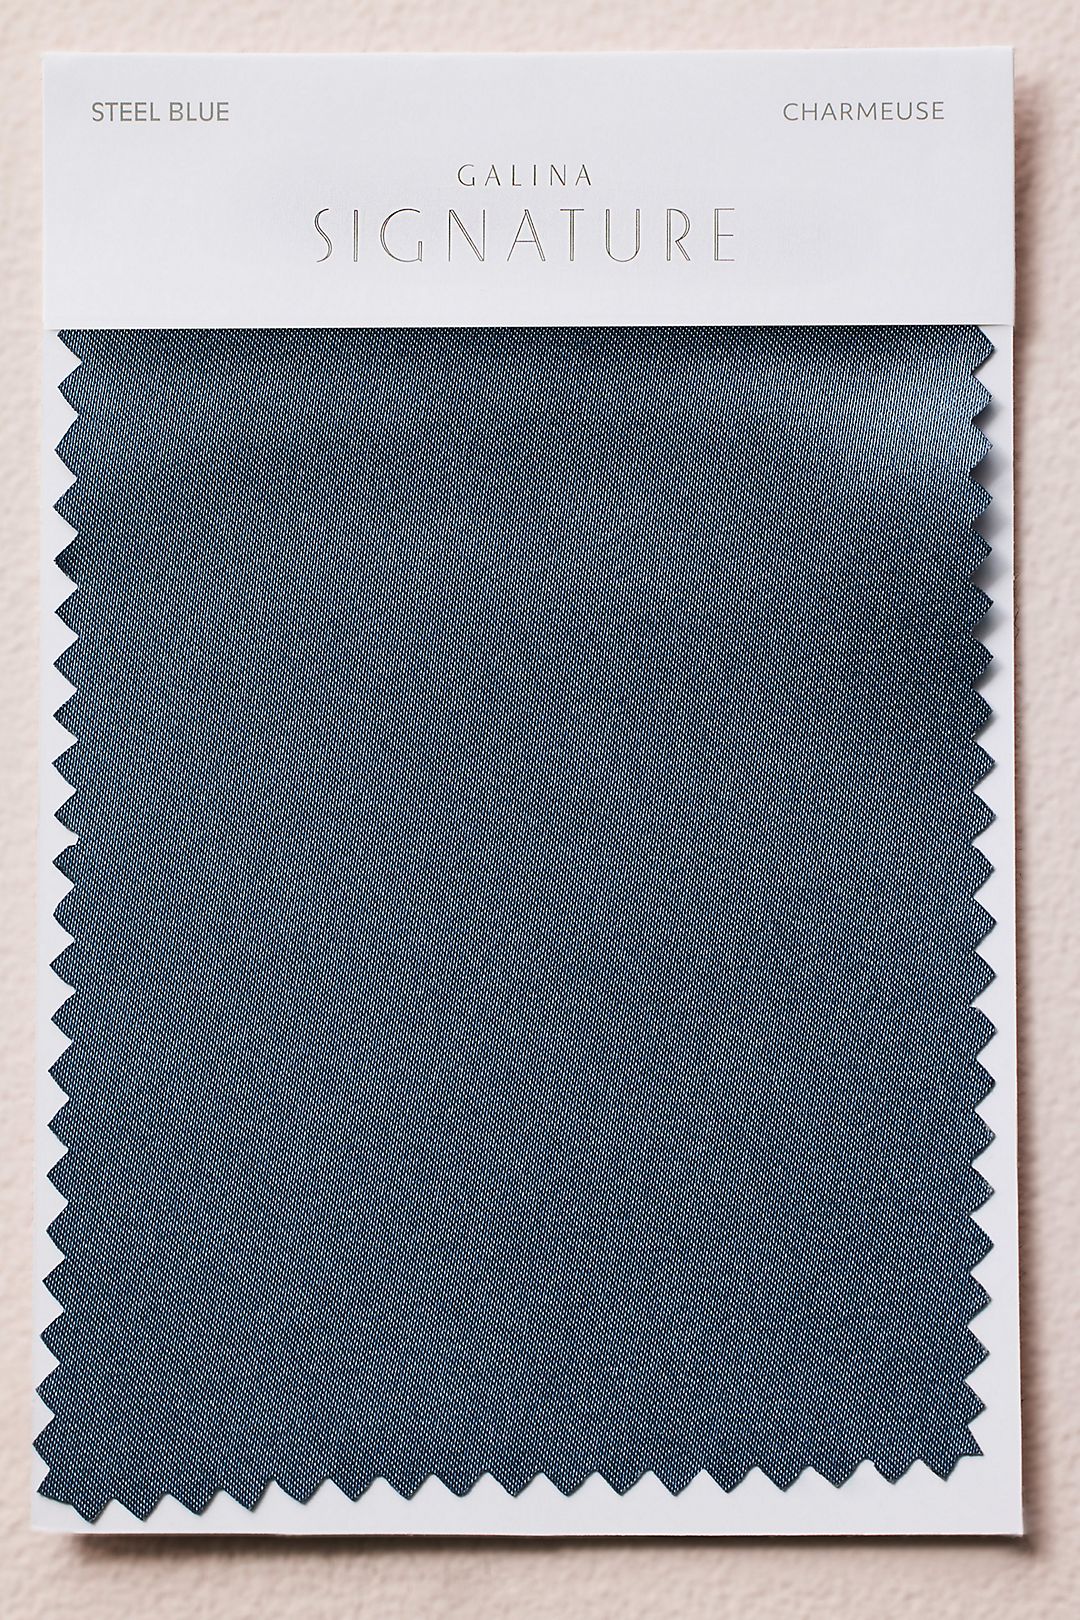 Steel Blue Fabric Swatch Image